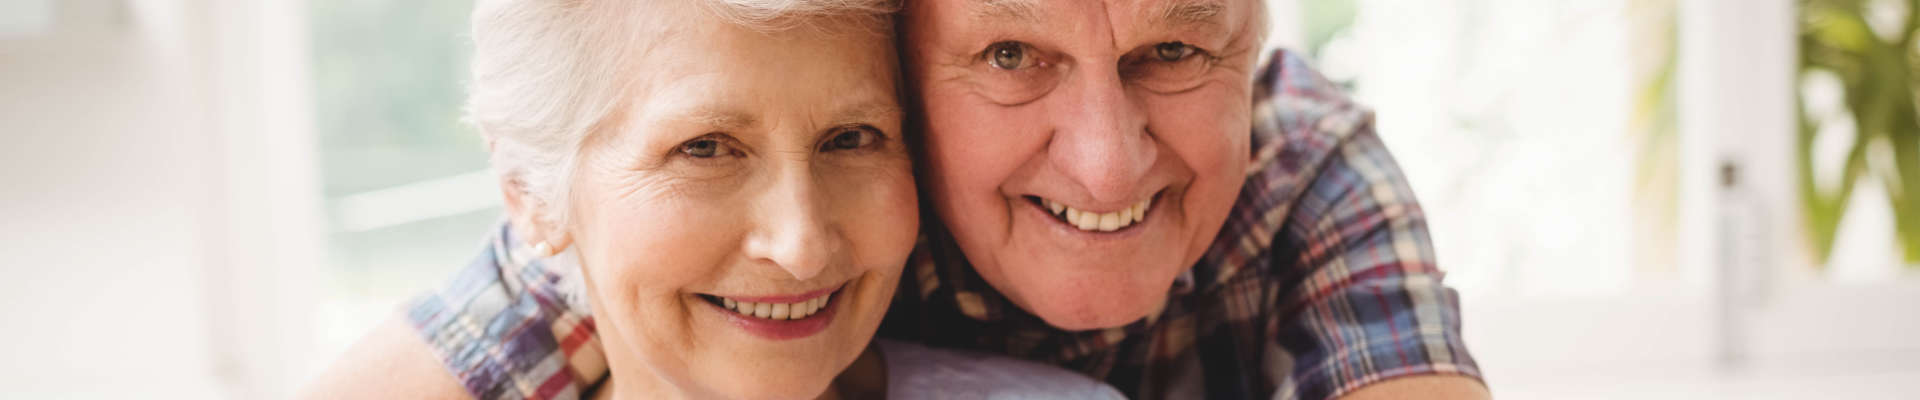 A hugging senior couple smiling.